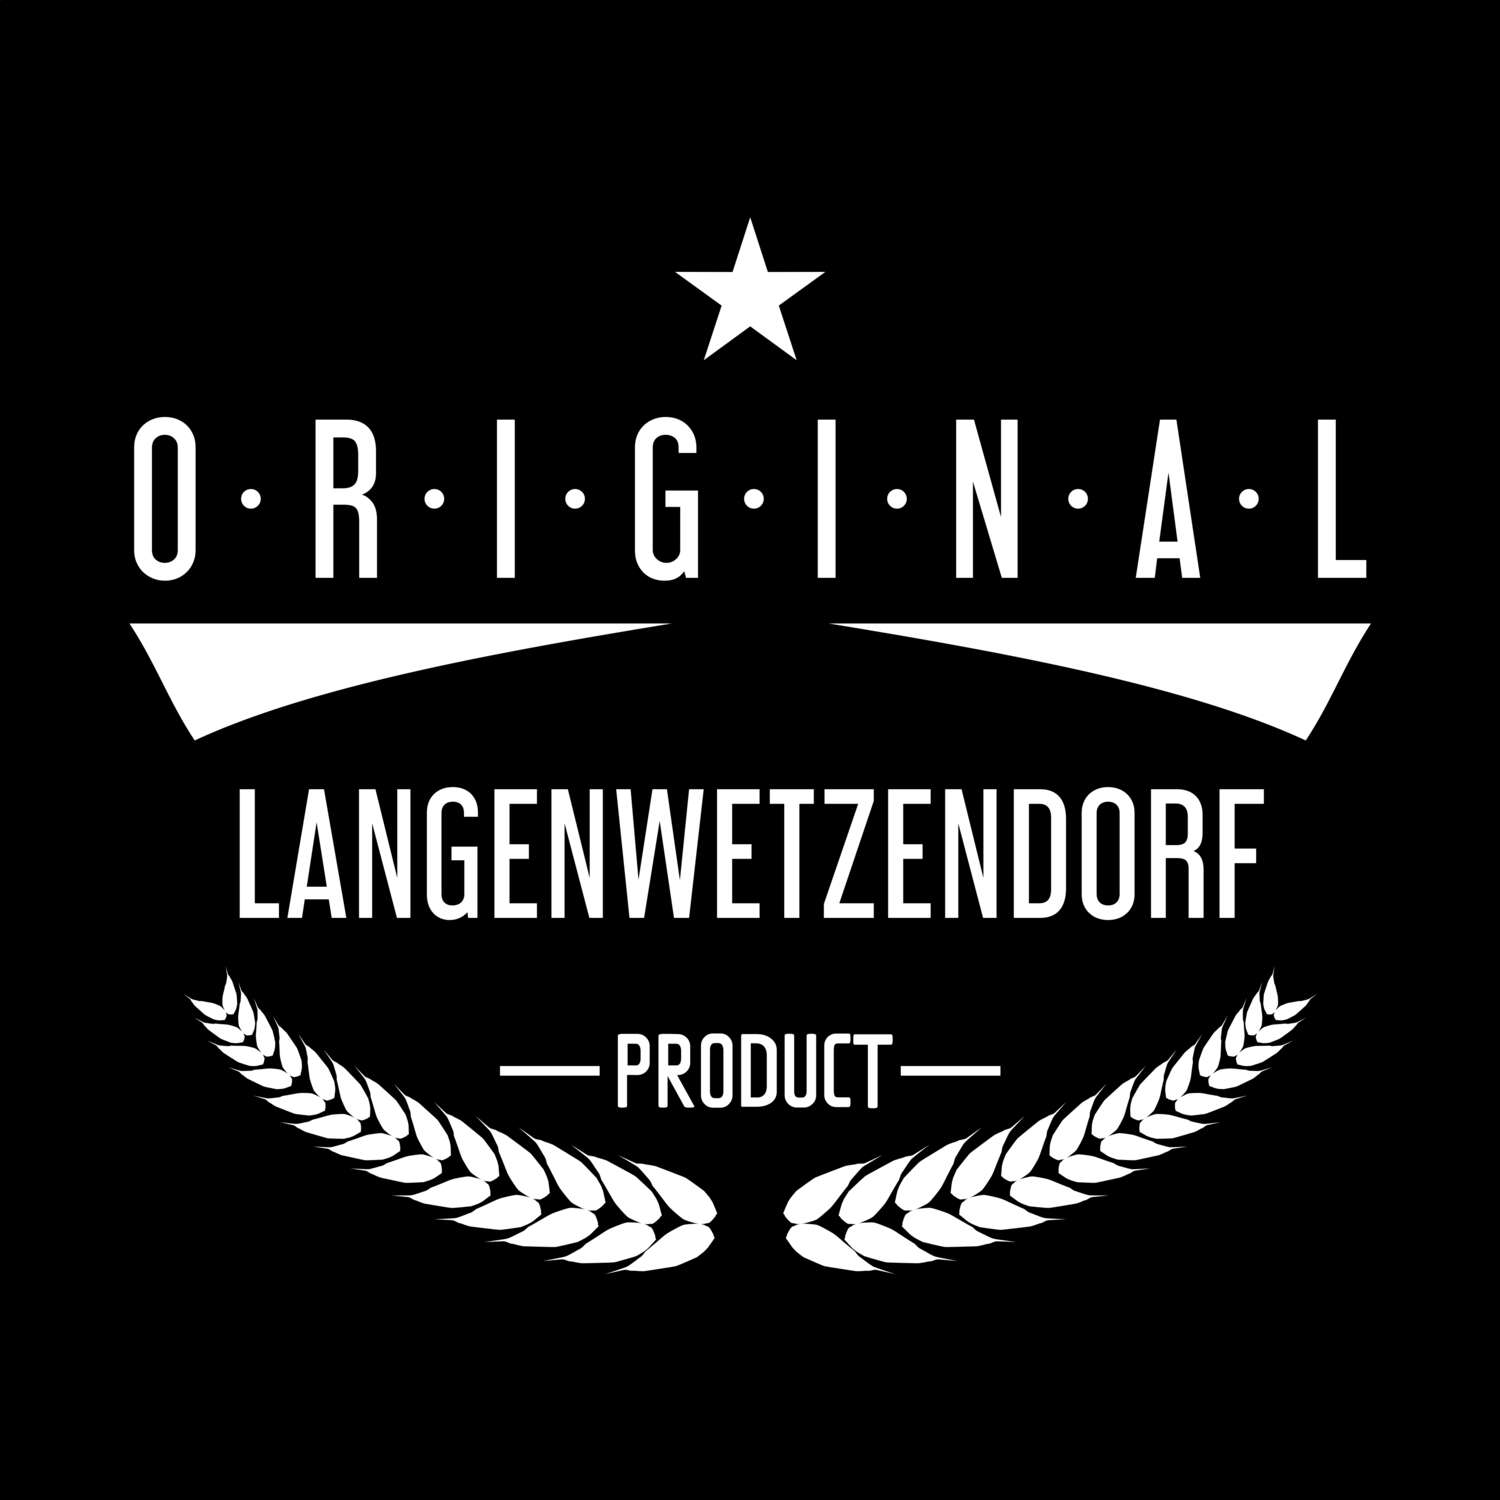 Langenwetzendorf T-Shirt »Original Product«